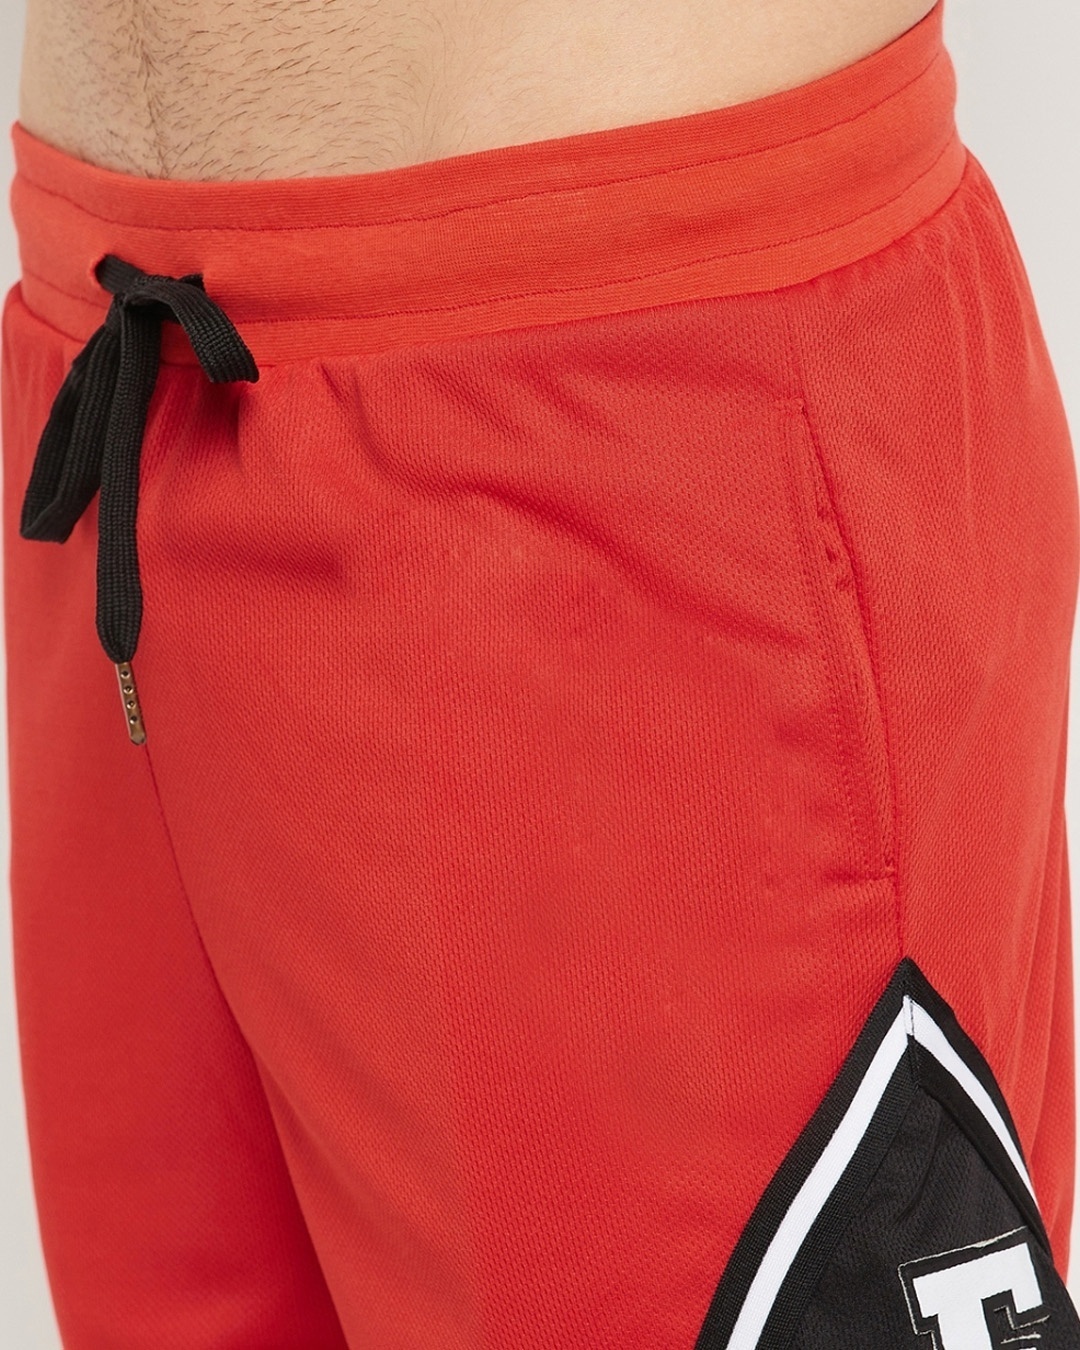 Shop Men's Red & Black Color Block Shorts